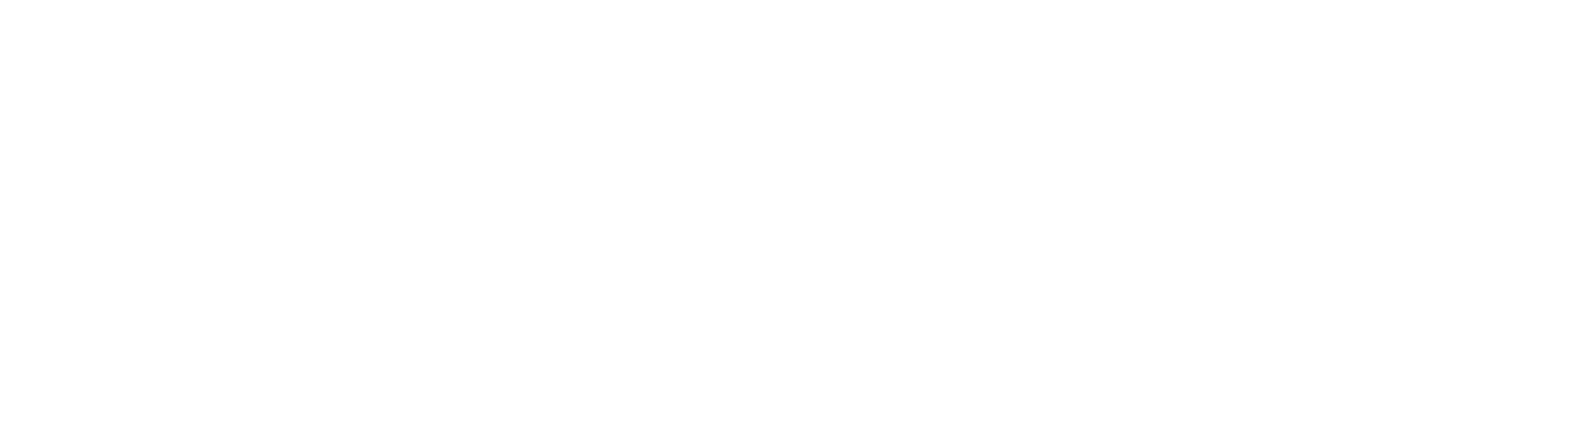 Kite Realty logo grand pour les fonds sombres (PNG transparent)